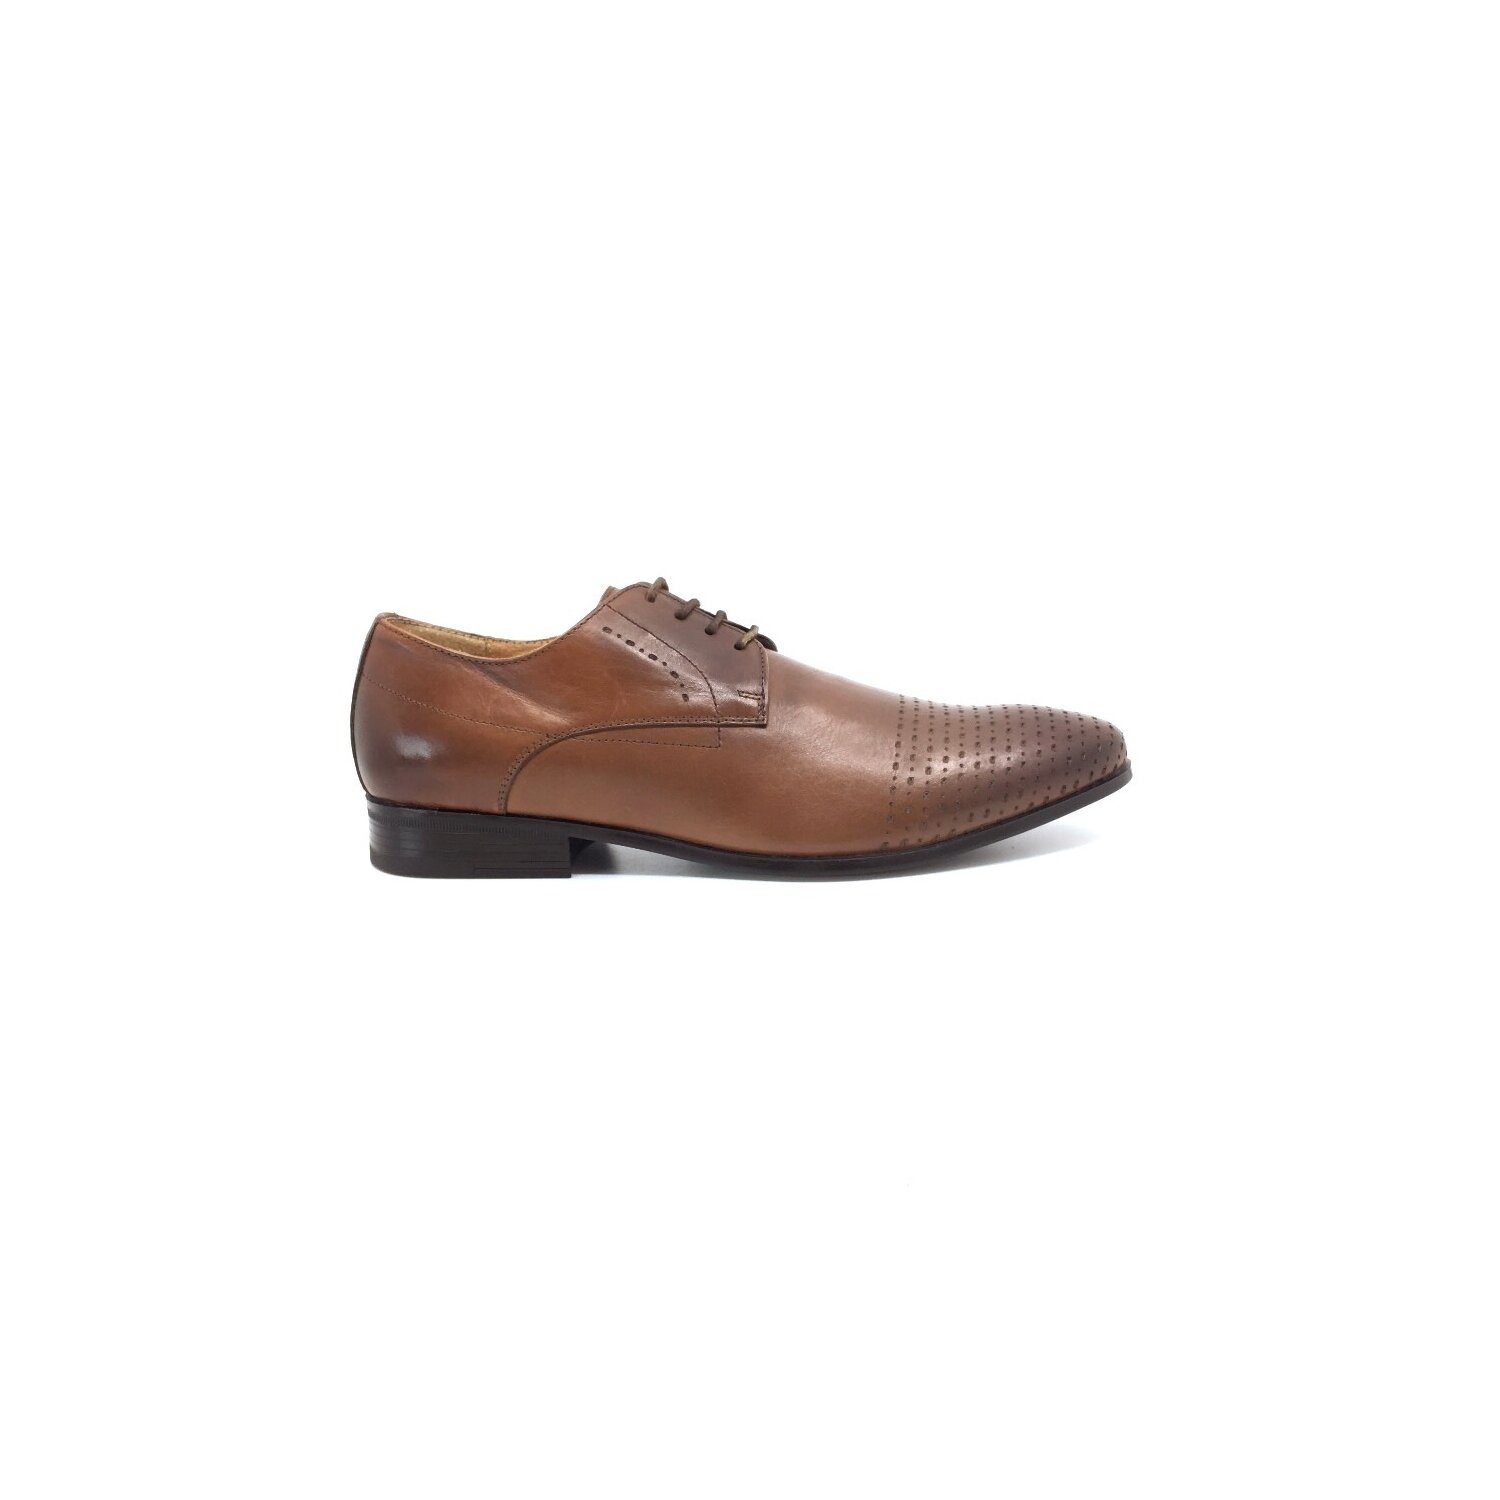 Pantofi eleganti barbati din piele naturala, Leofex - 888 cognac box